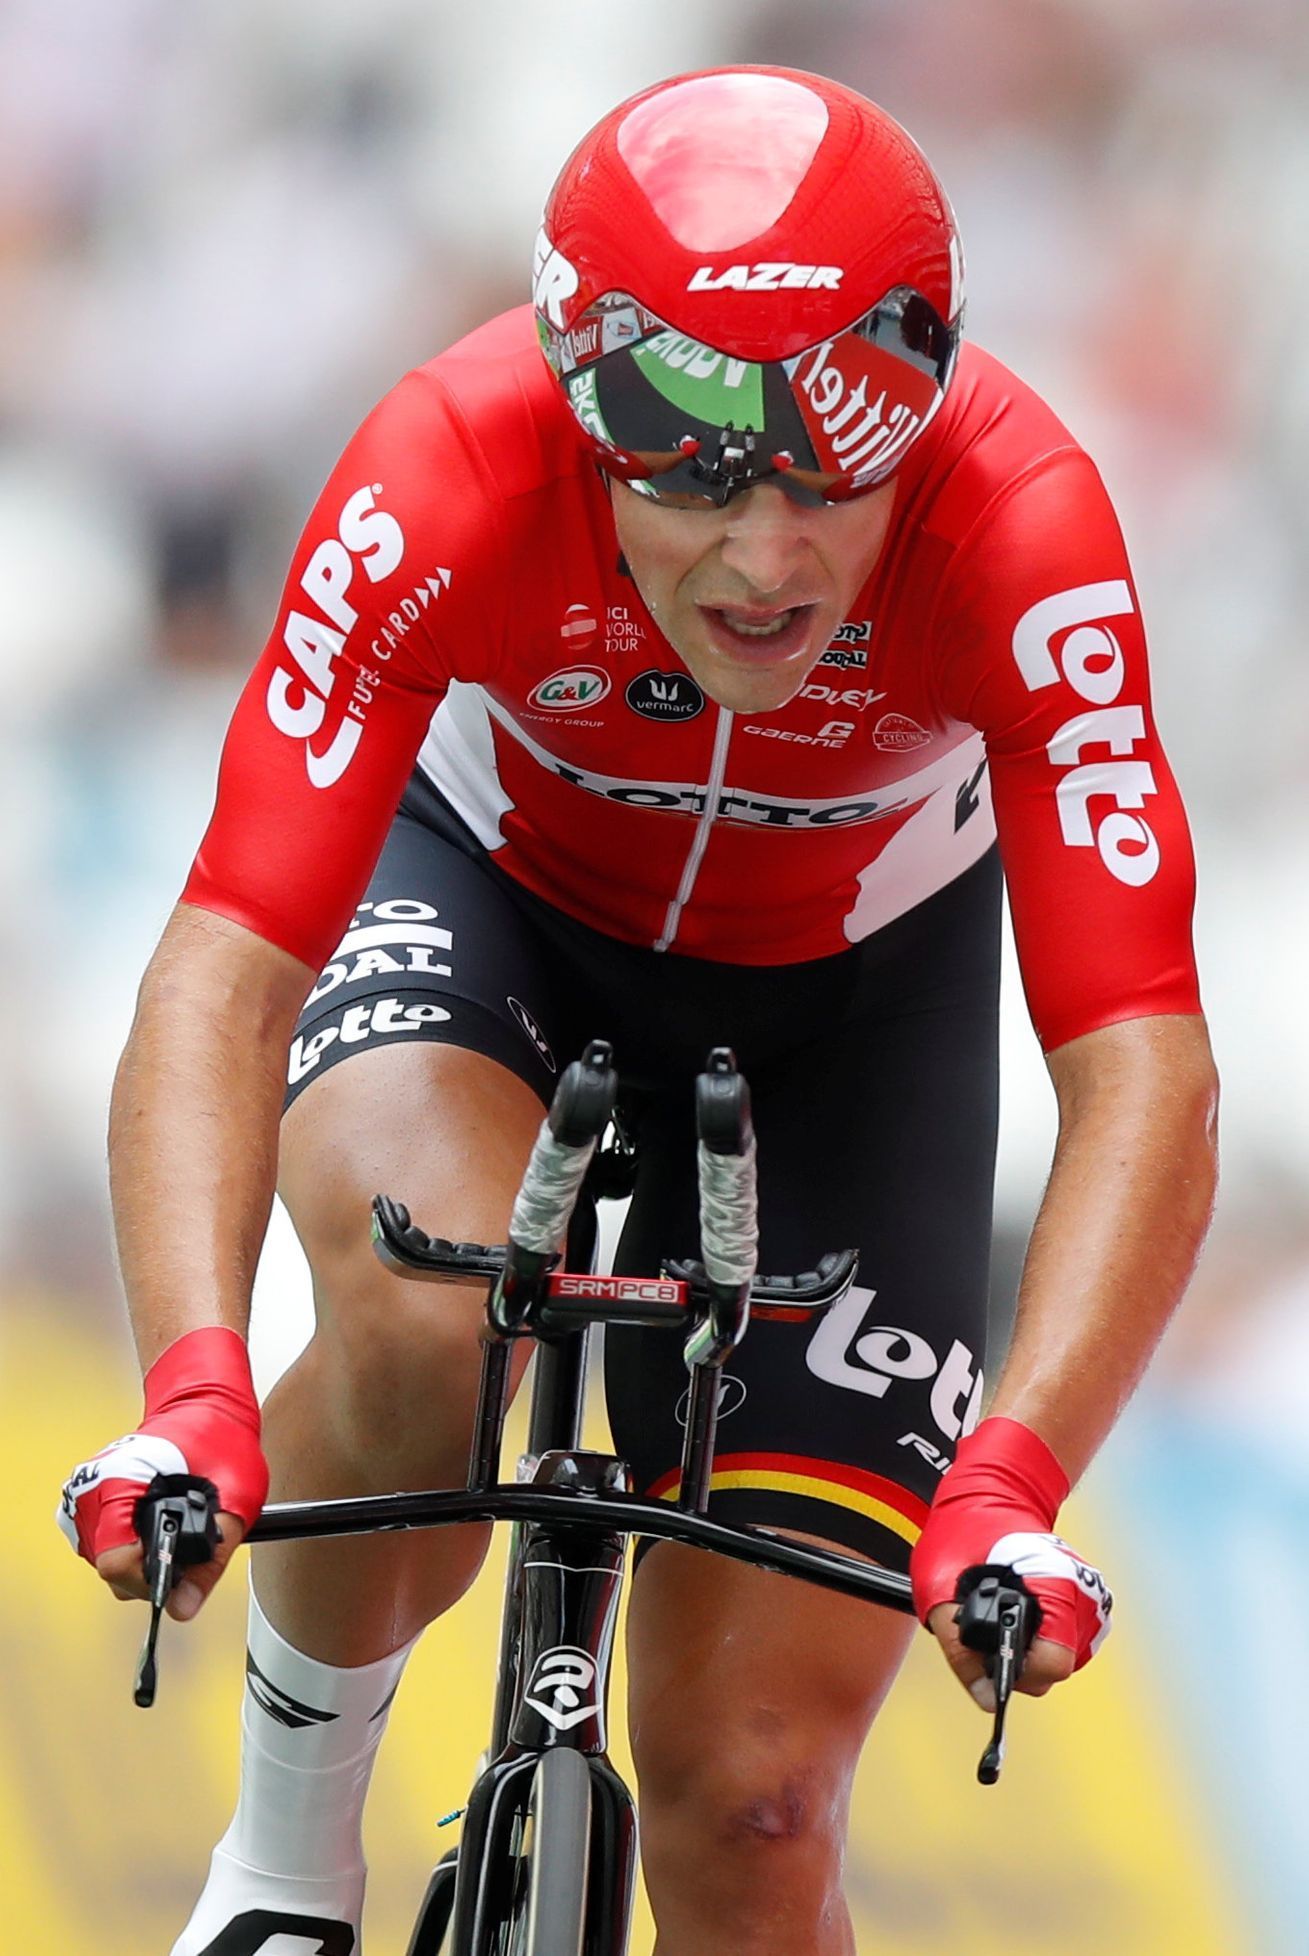 Tour de France 2017: Tony Gallopin